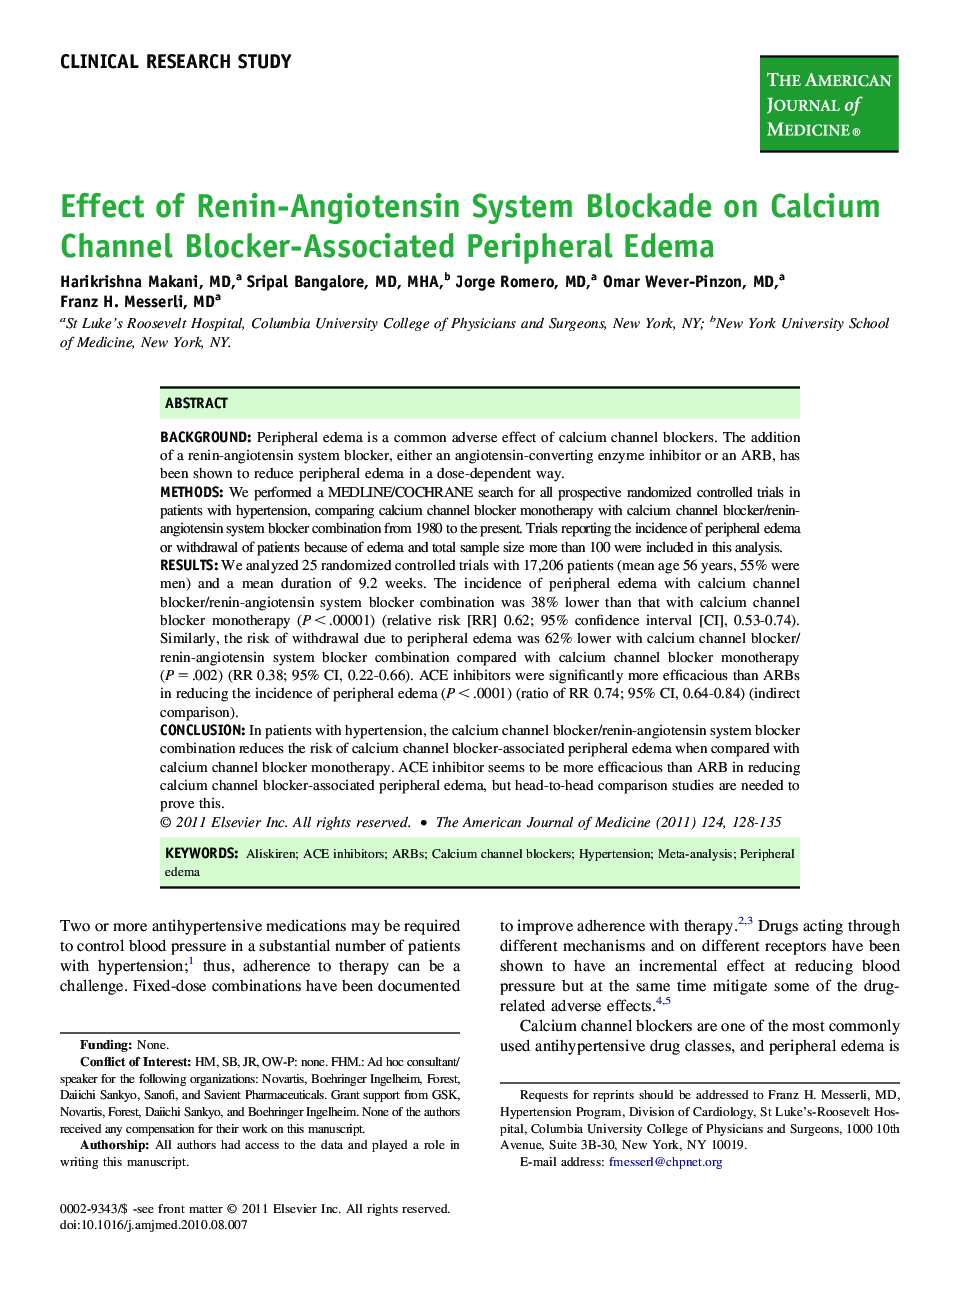 Effect of Renin-Angiotensin System Blockade on Calcium Channel Blocker-Associated Peripheral Edema 